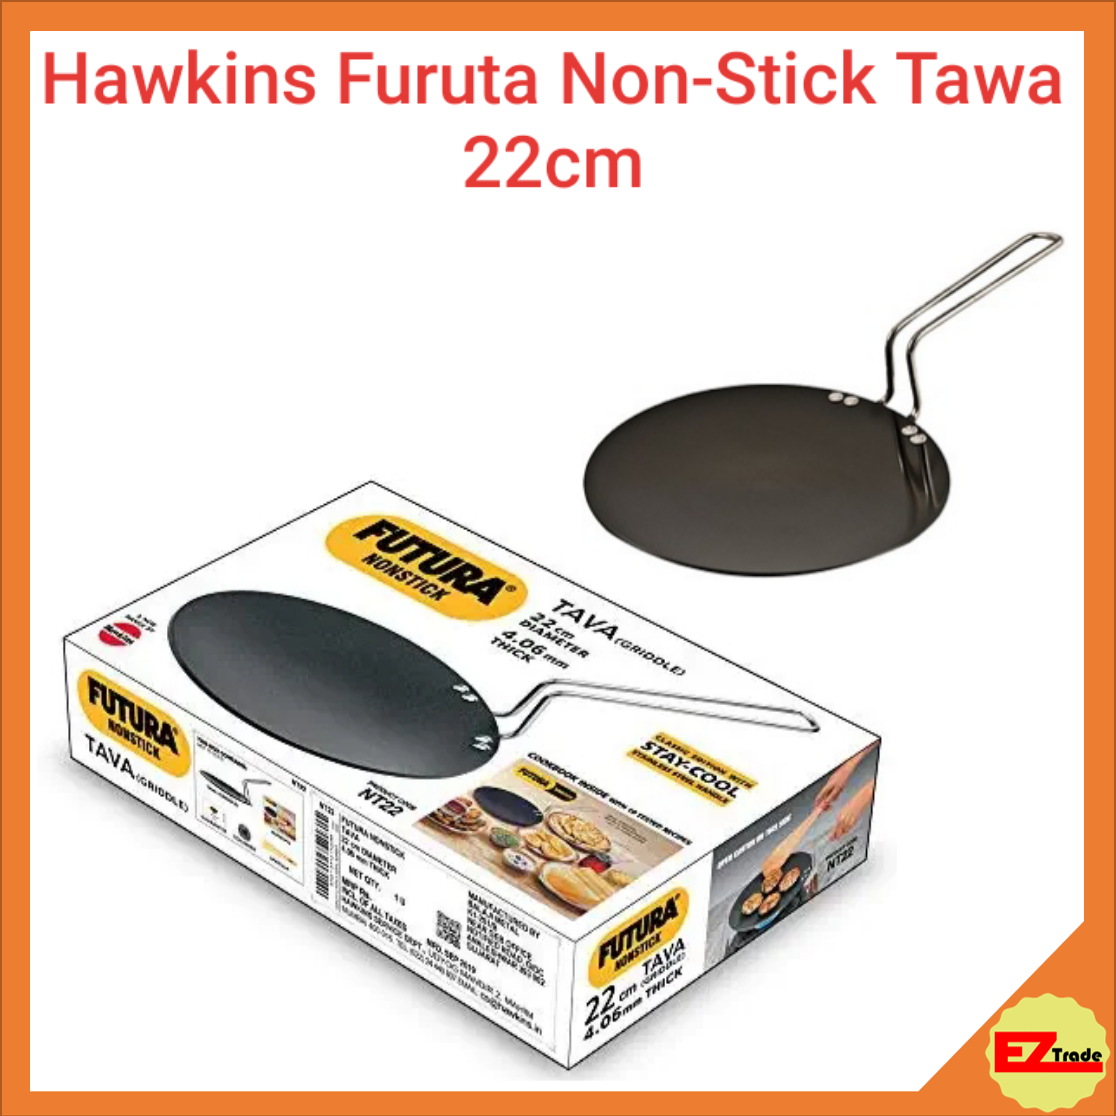 Hawkins Futura Non-Stick Tawa, Frypan, Frying Pan, 22cm, NT22